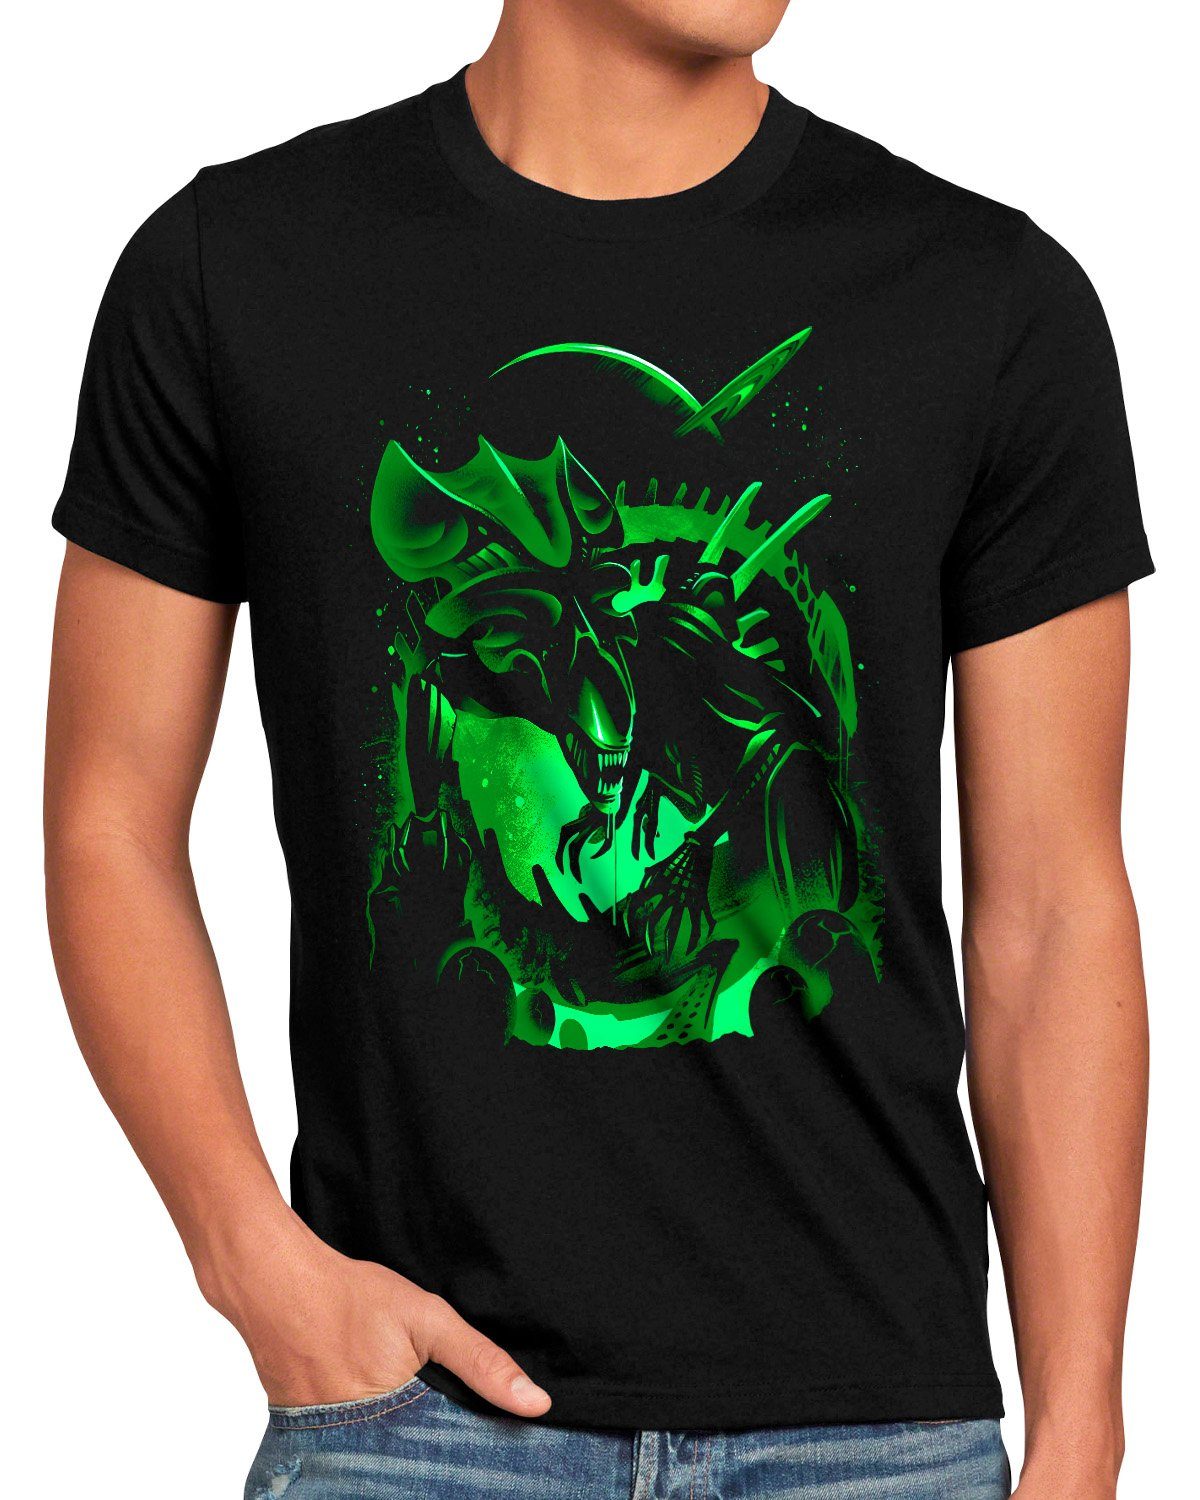 ridley scott Print-Shirt predator Queen xenomorph Predatory Herren T-Shirt alien style3